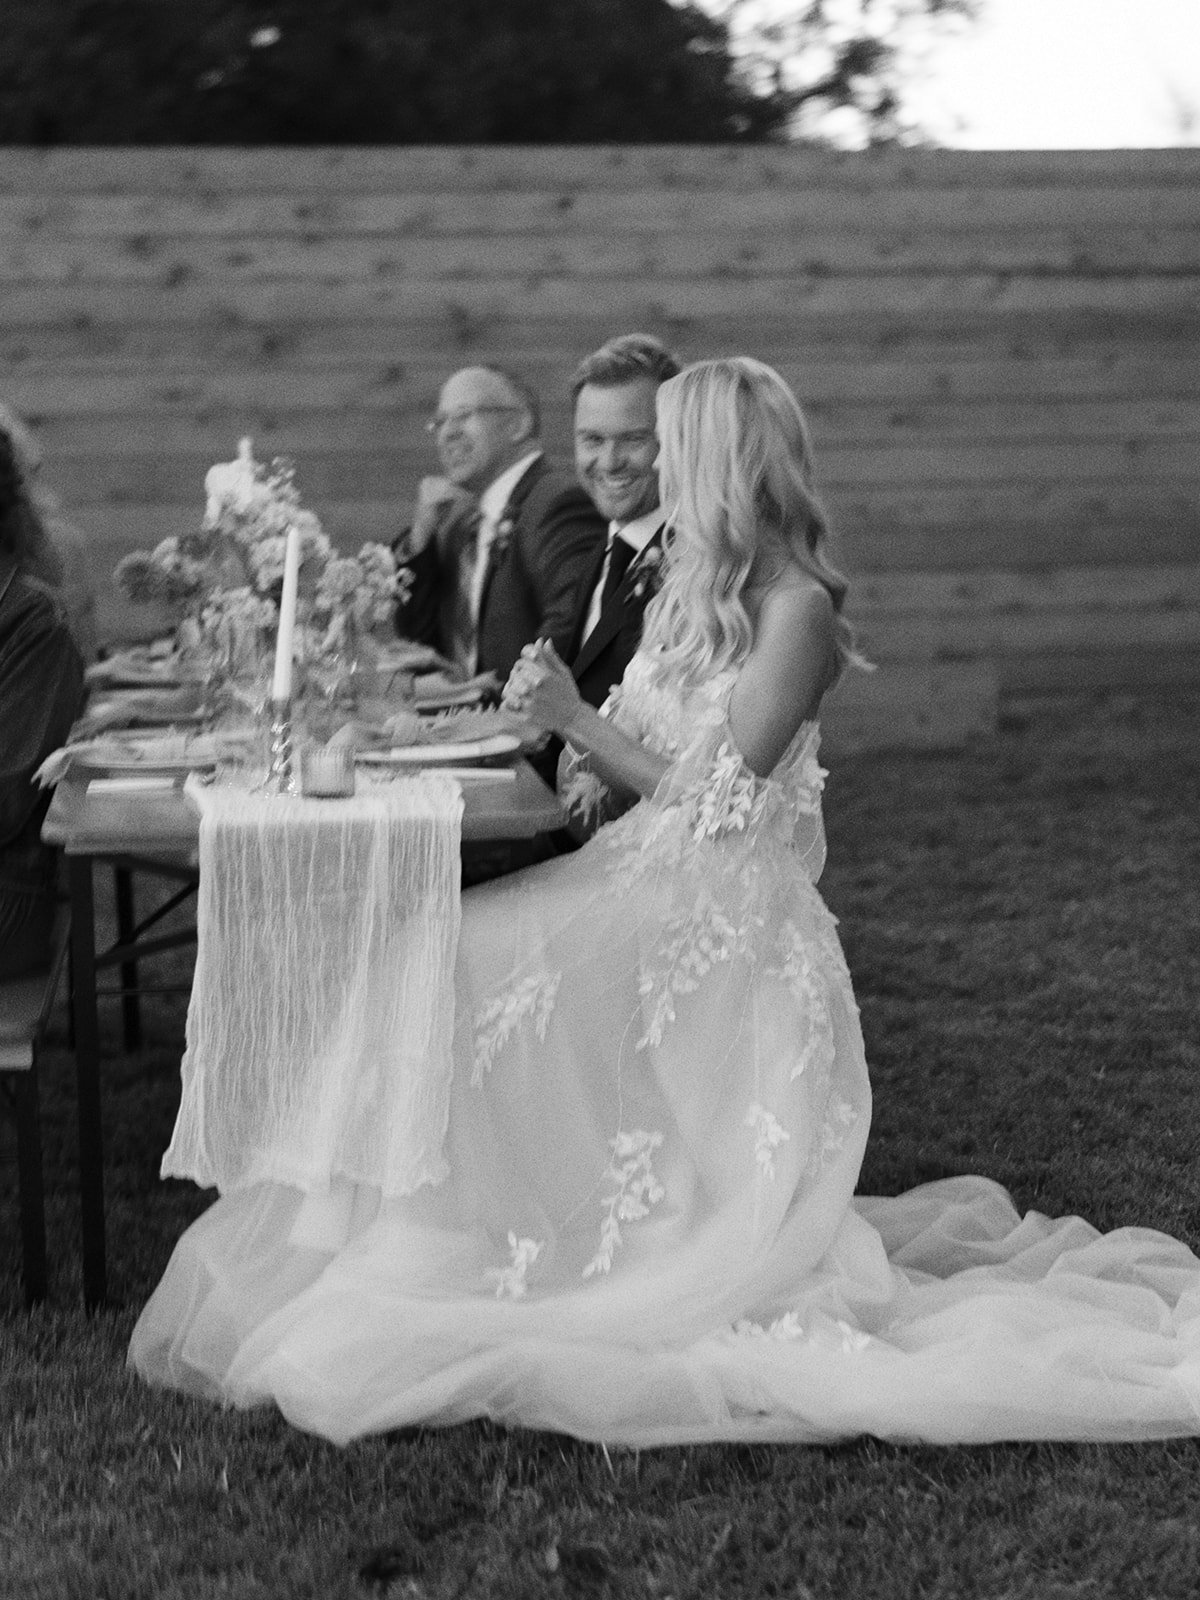 Best-Austin-Wedding-Photographers-Elopement-Film-35mm-Asheville-Santa-Barbara-Backyard-155.jpg